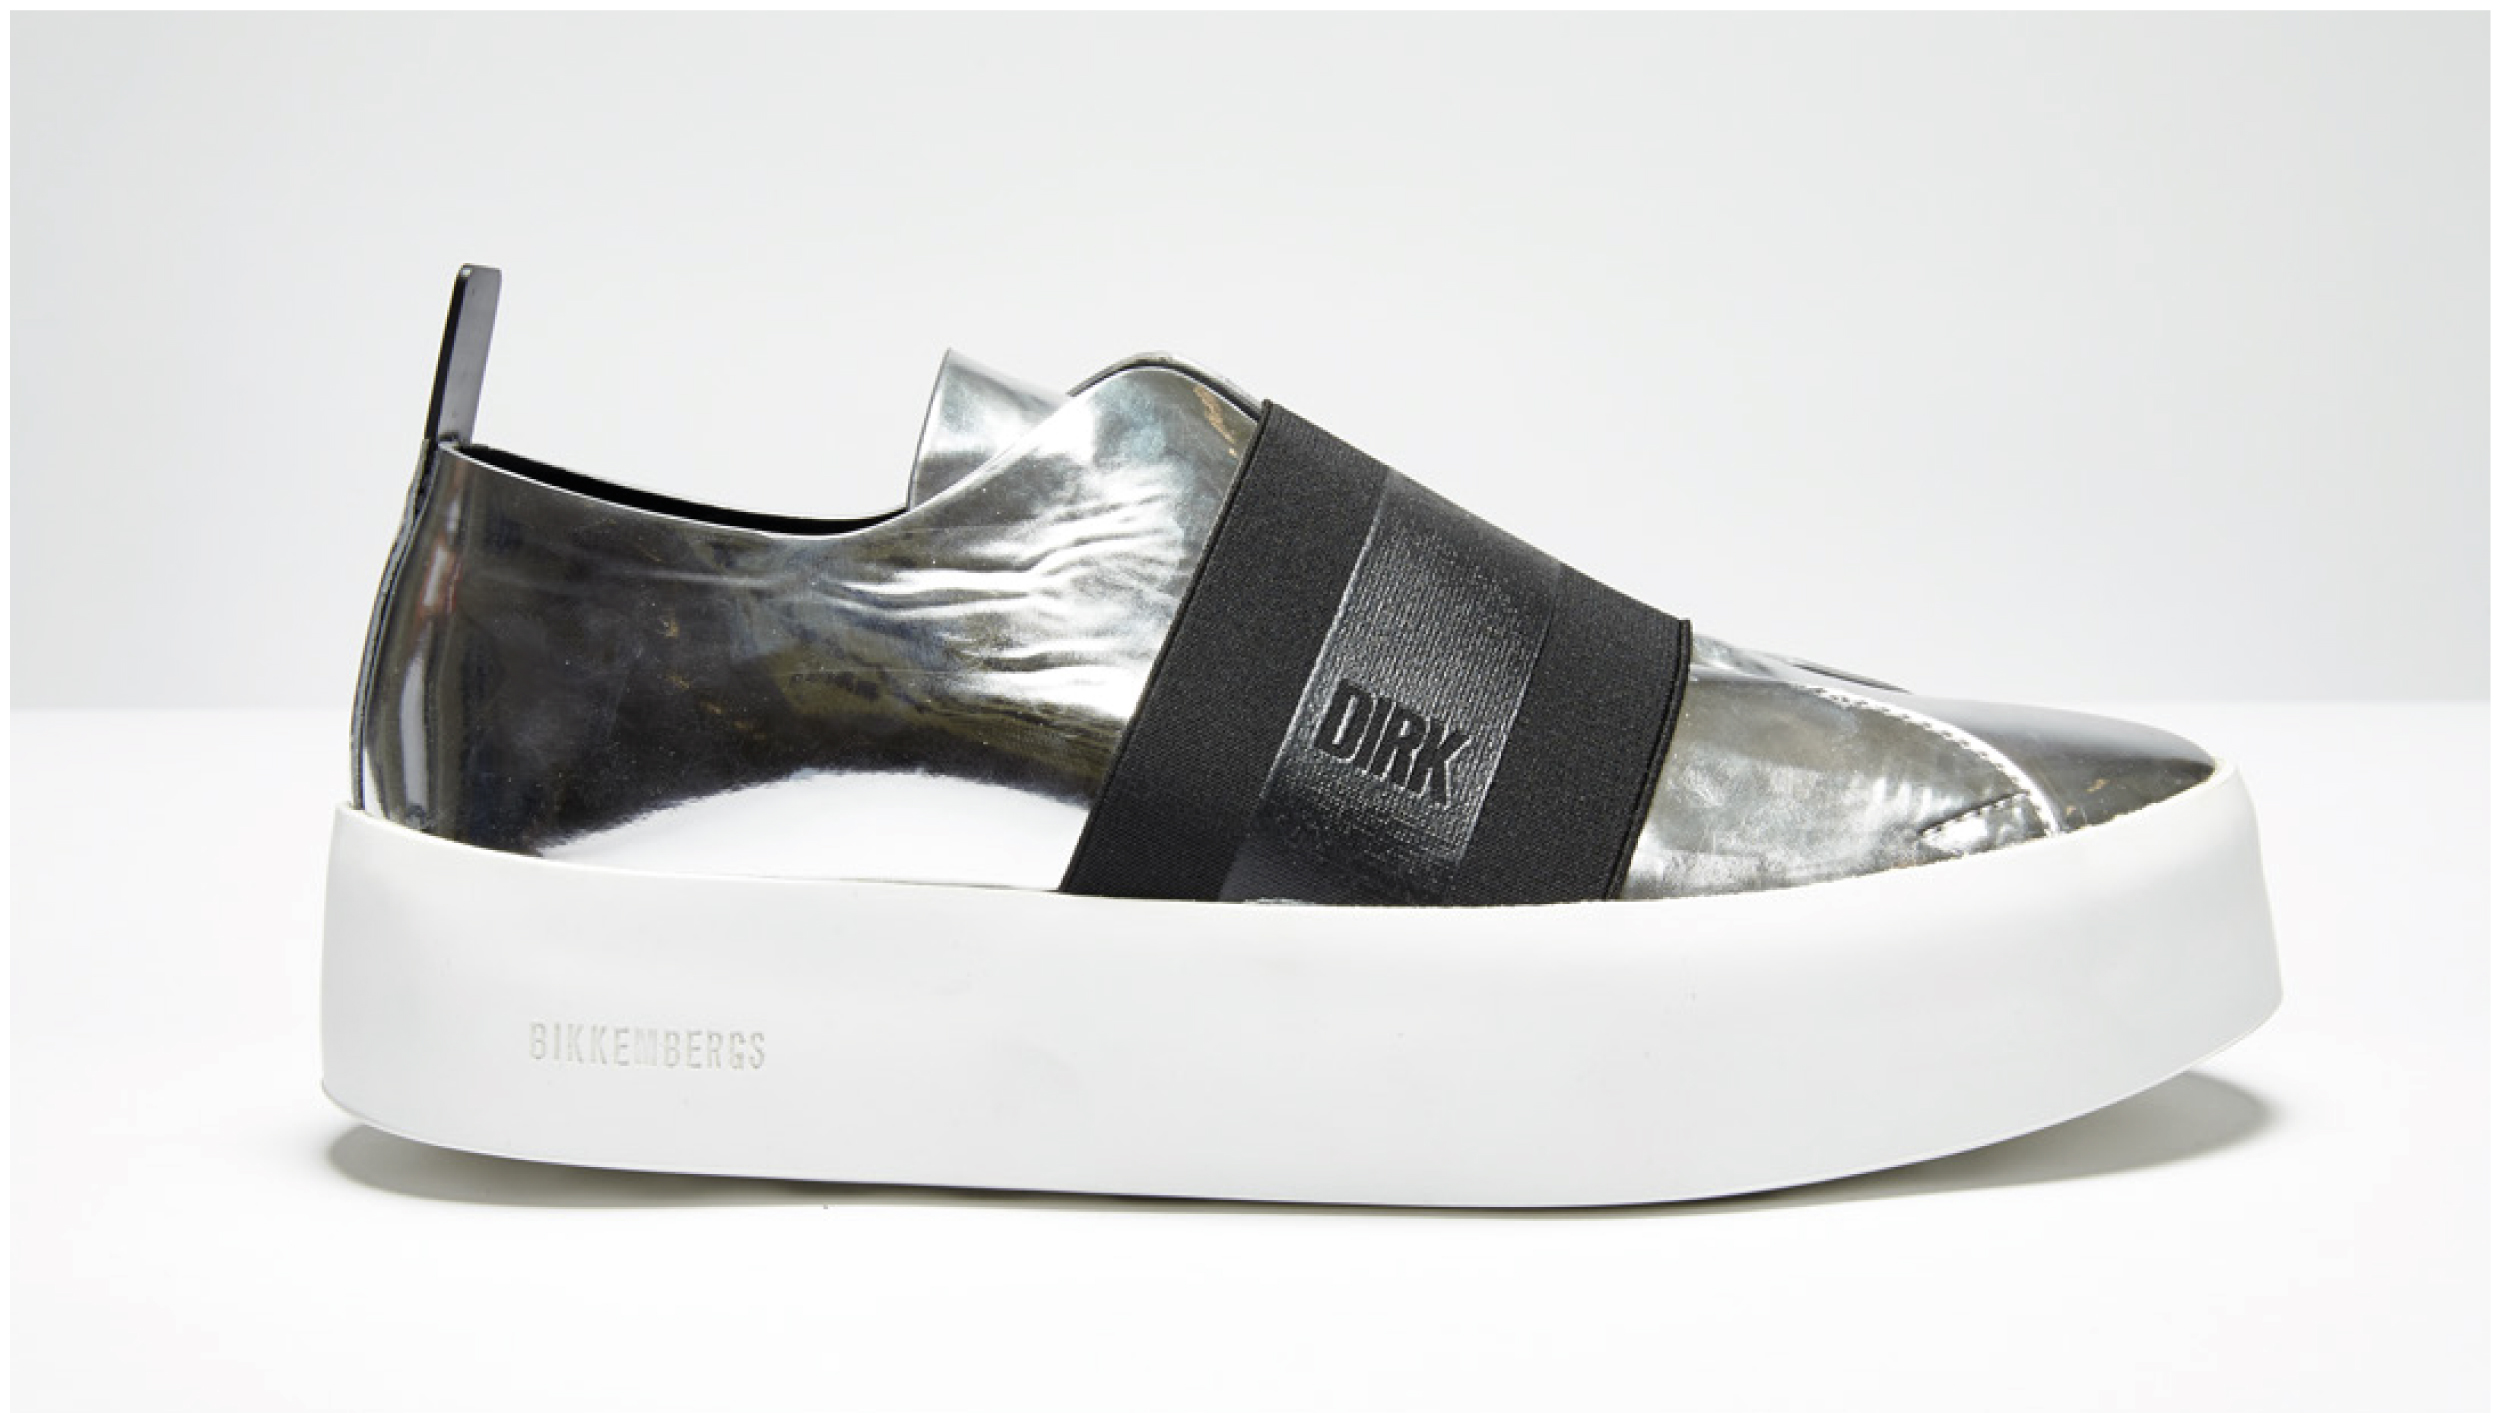 Dirk Bikkembergs представили коллекцию обуви Sport Couture  SS’16-320x180